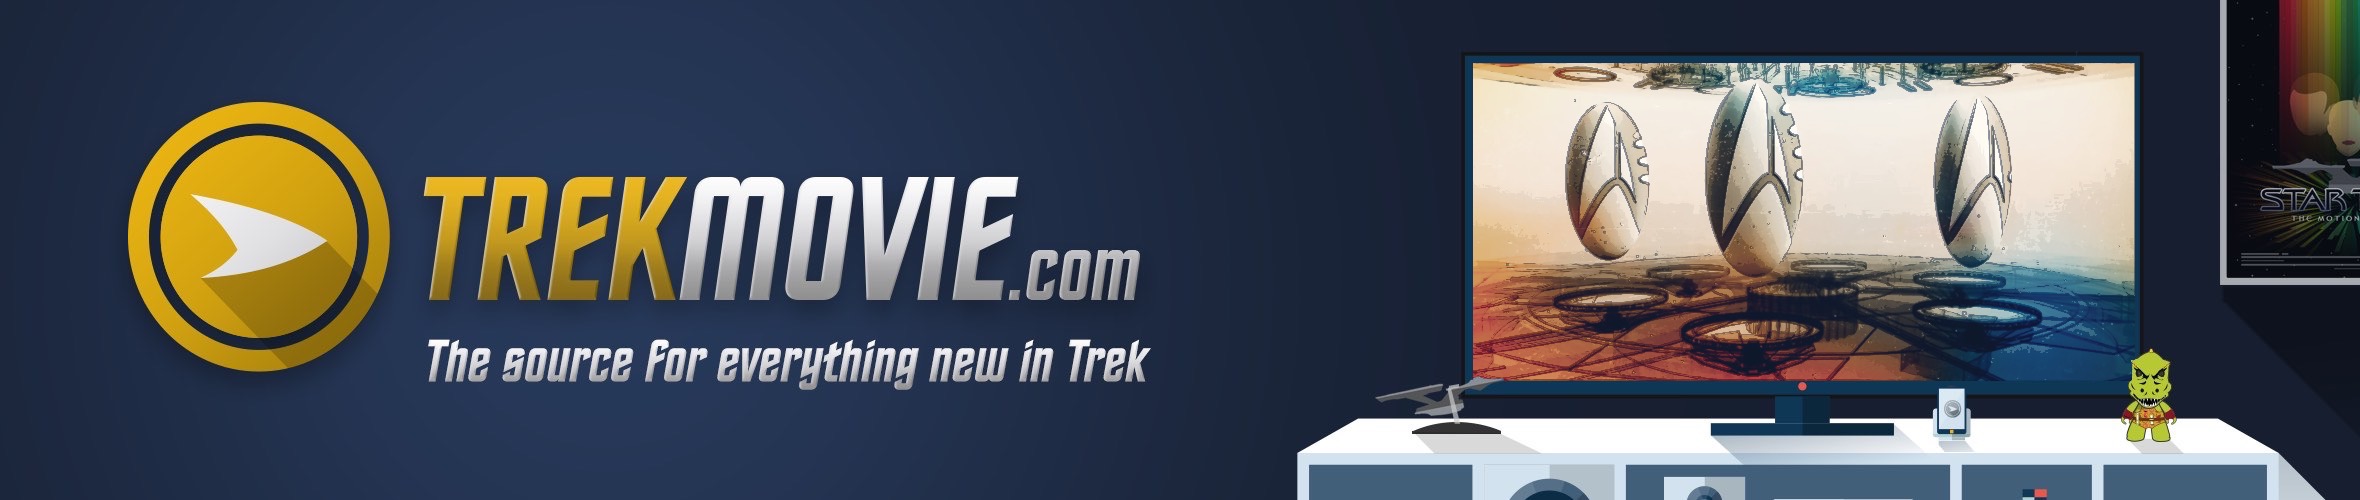 Star Trek Las Vegas Cancelled Creation Announces 55 Year Mission Convention For 2021 Trekmovie Com